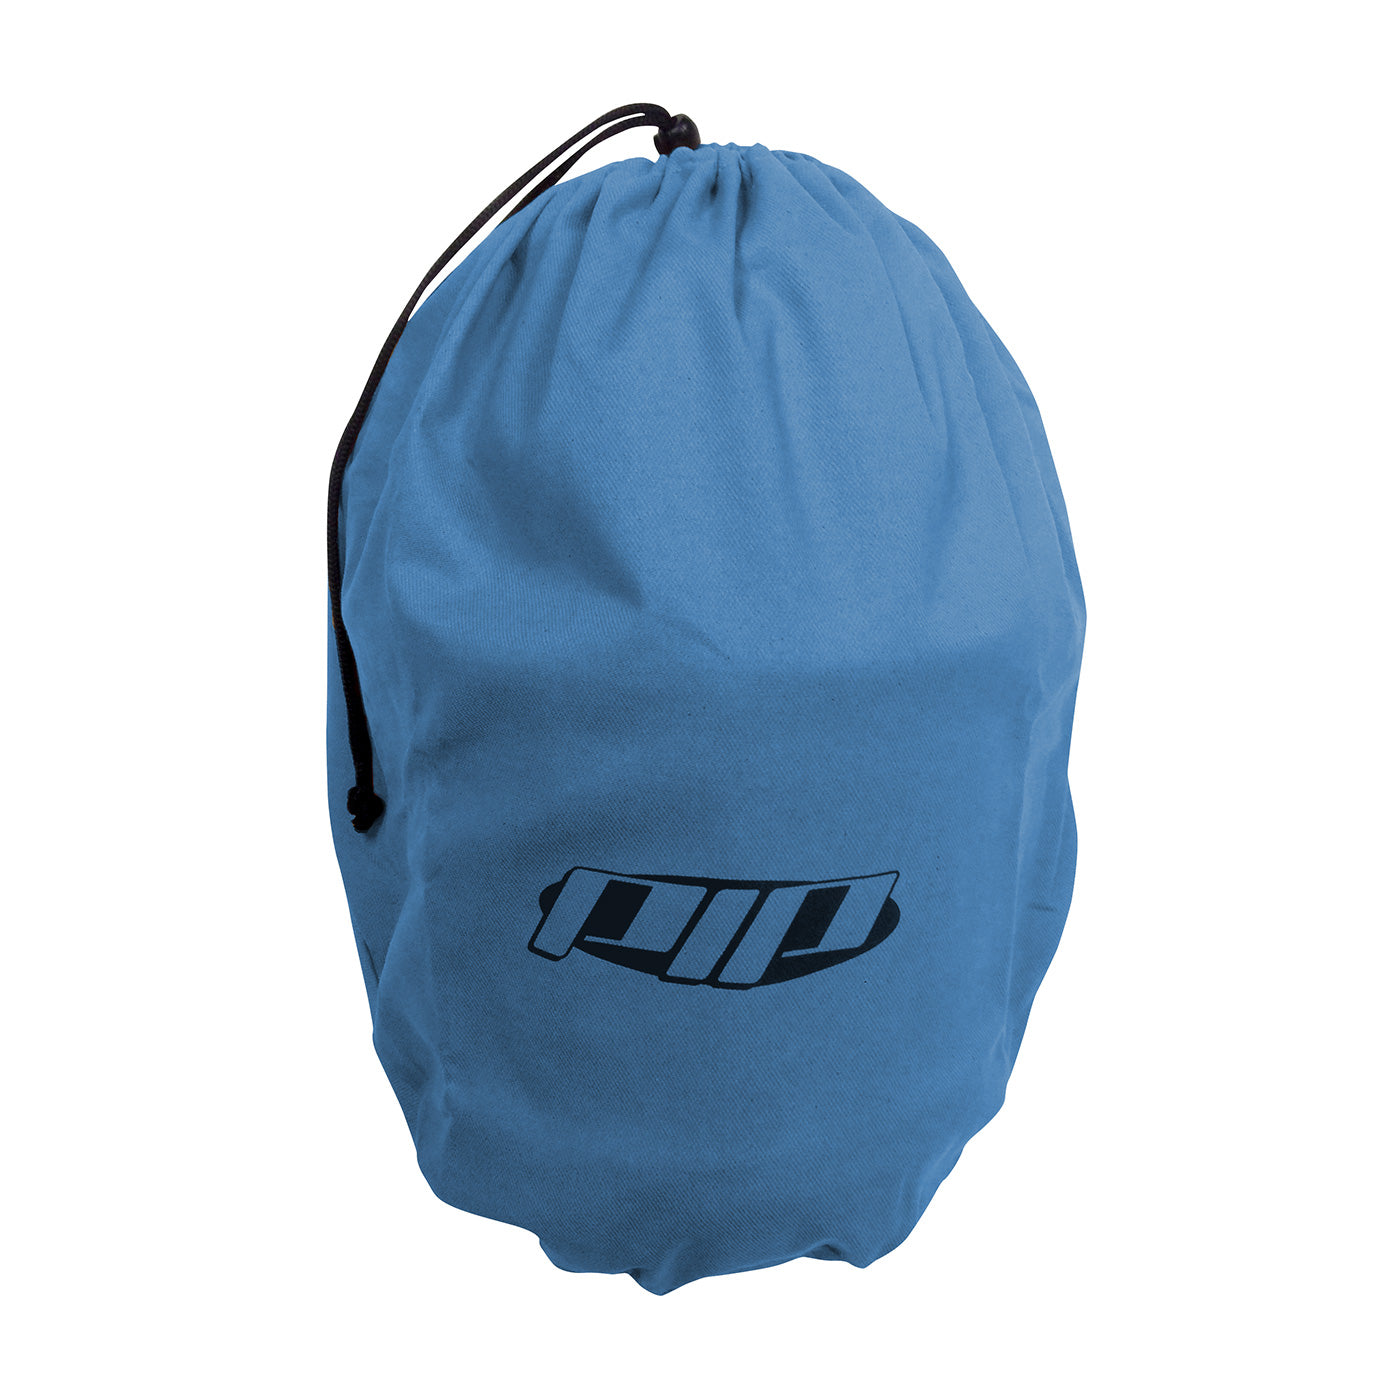 PIP 9400-52509 Arc Shield Storage Bag